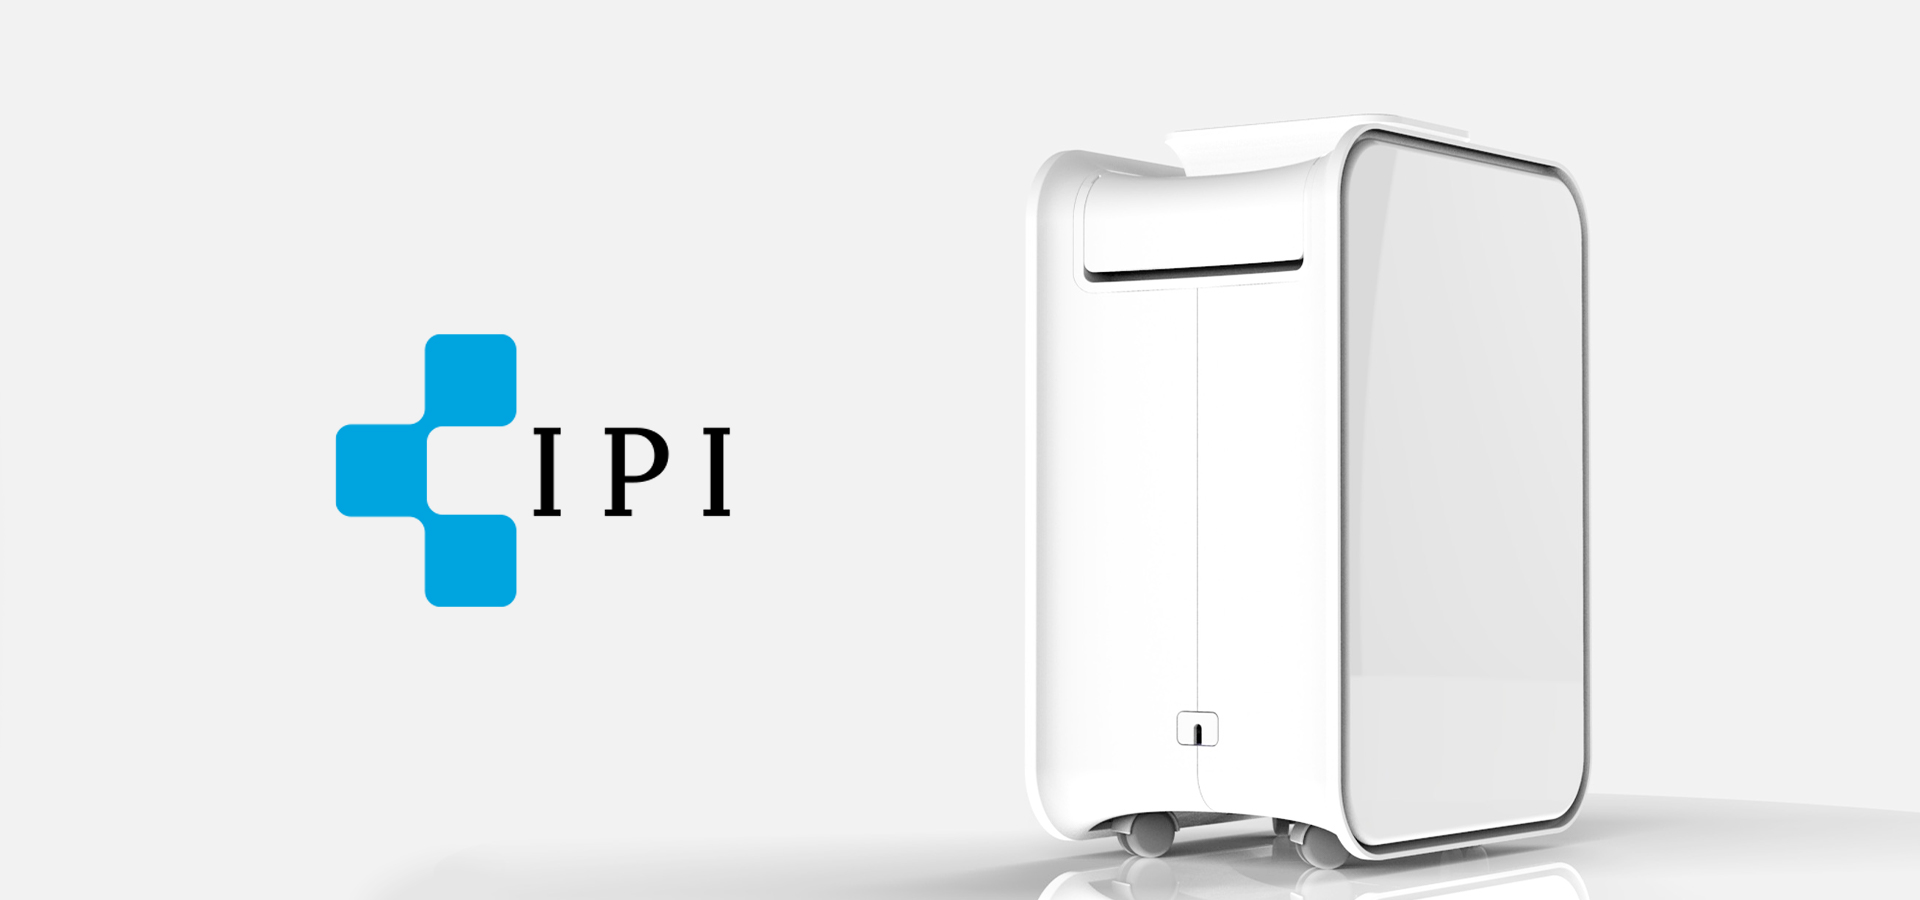 IPI small banner | IPI空氣清淨機品牌建構專案 | Labsology 法博思品牌顧問公司